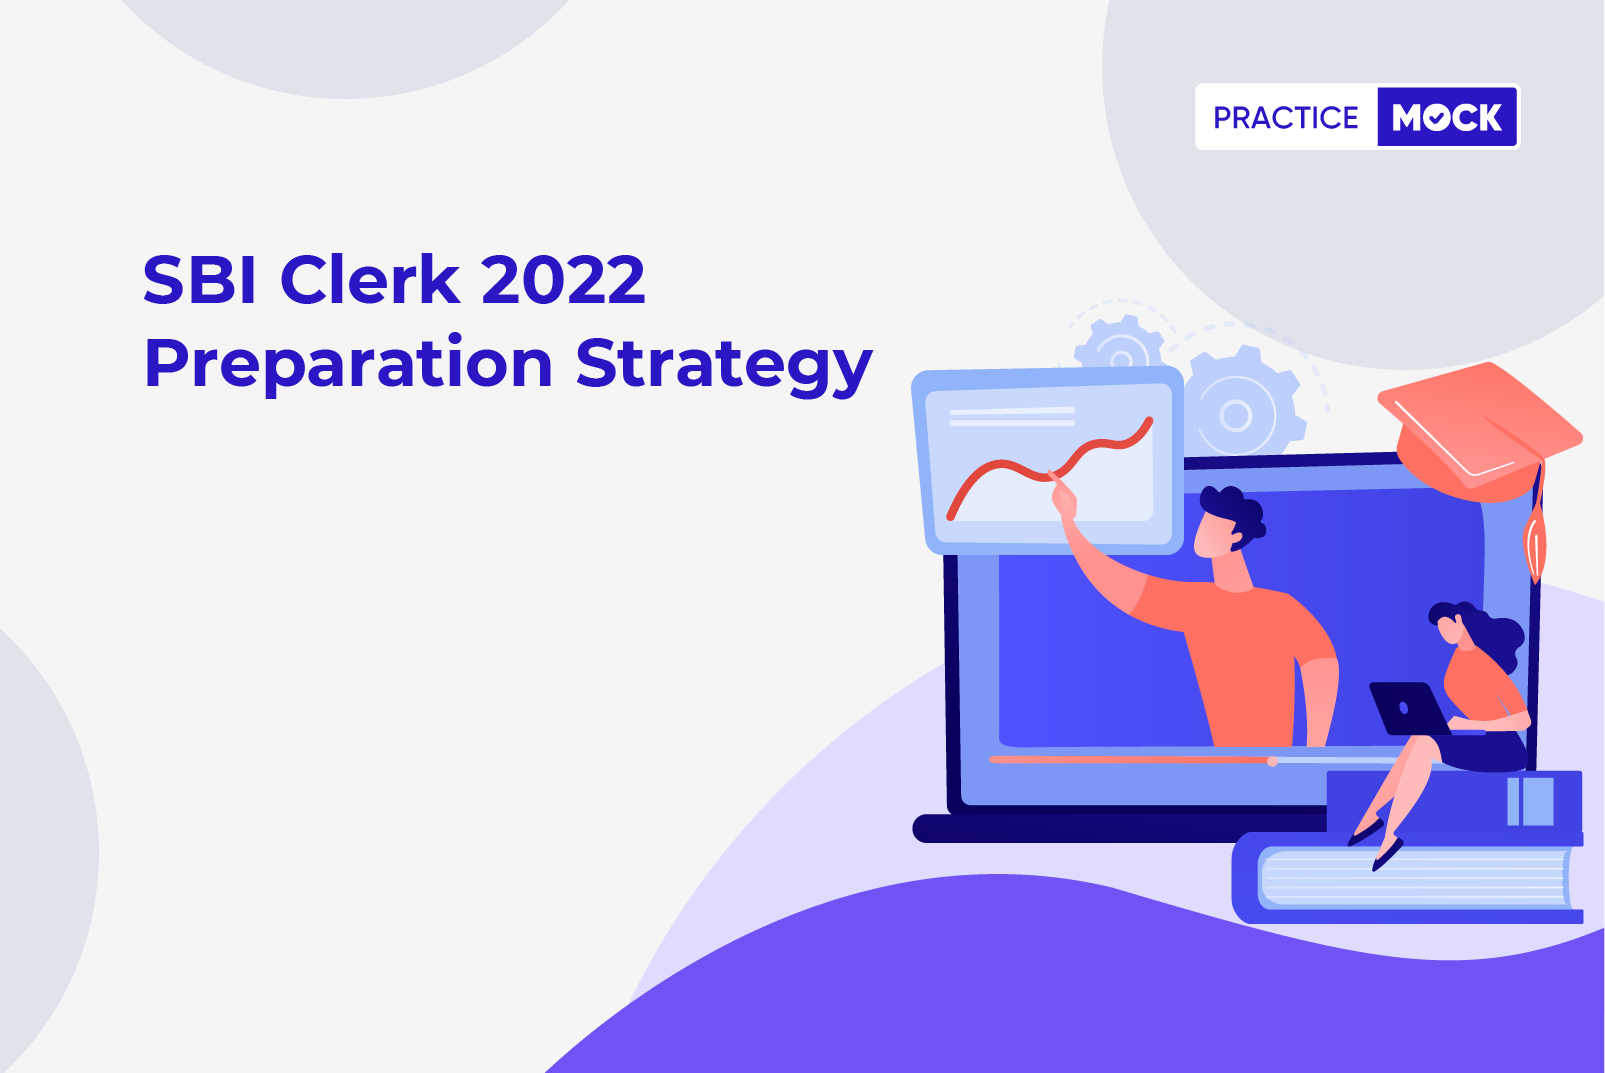 SBI Clerk Preparation Strategy 2022